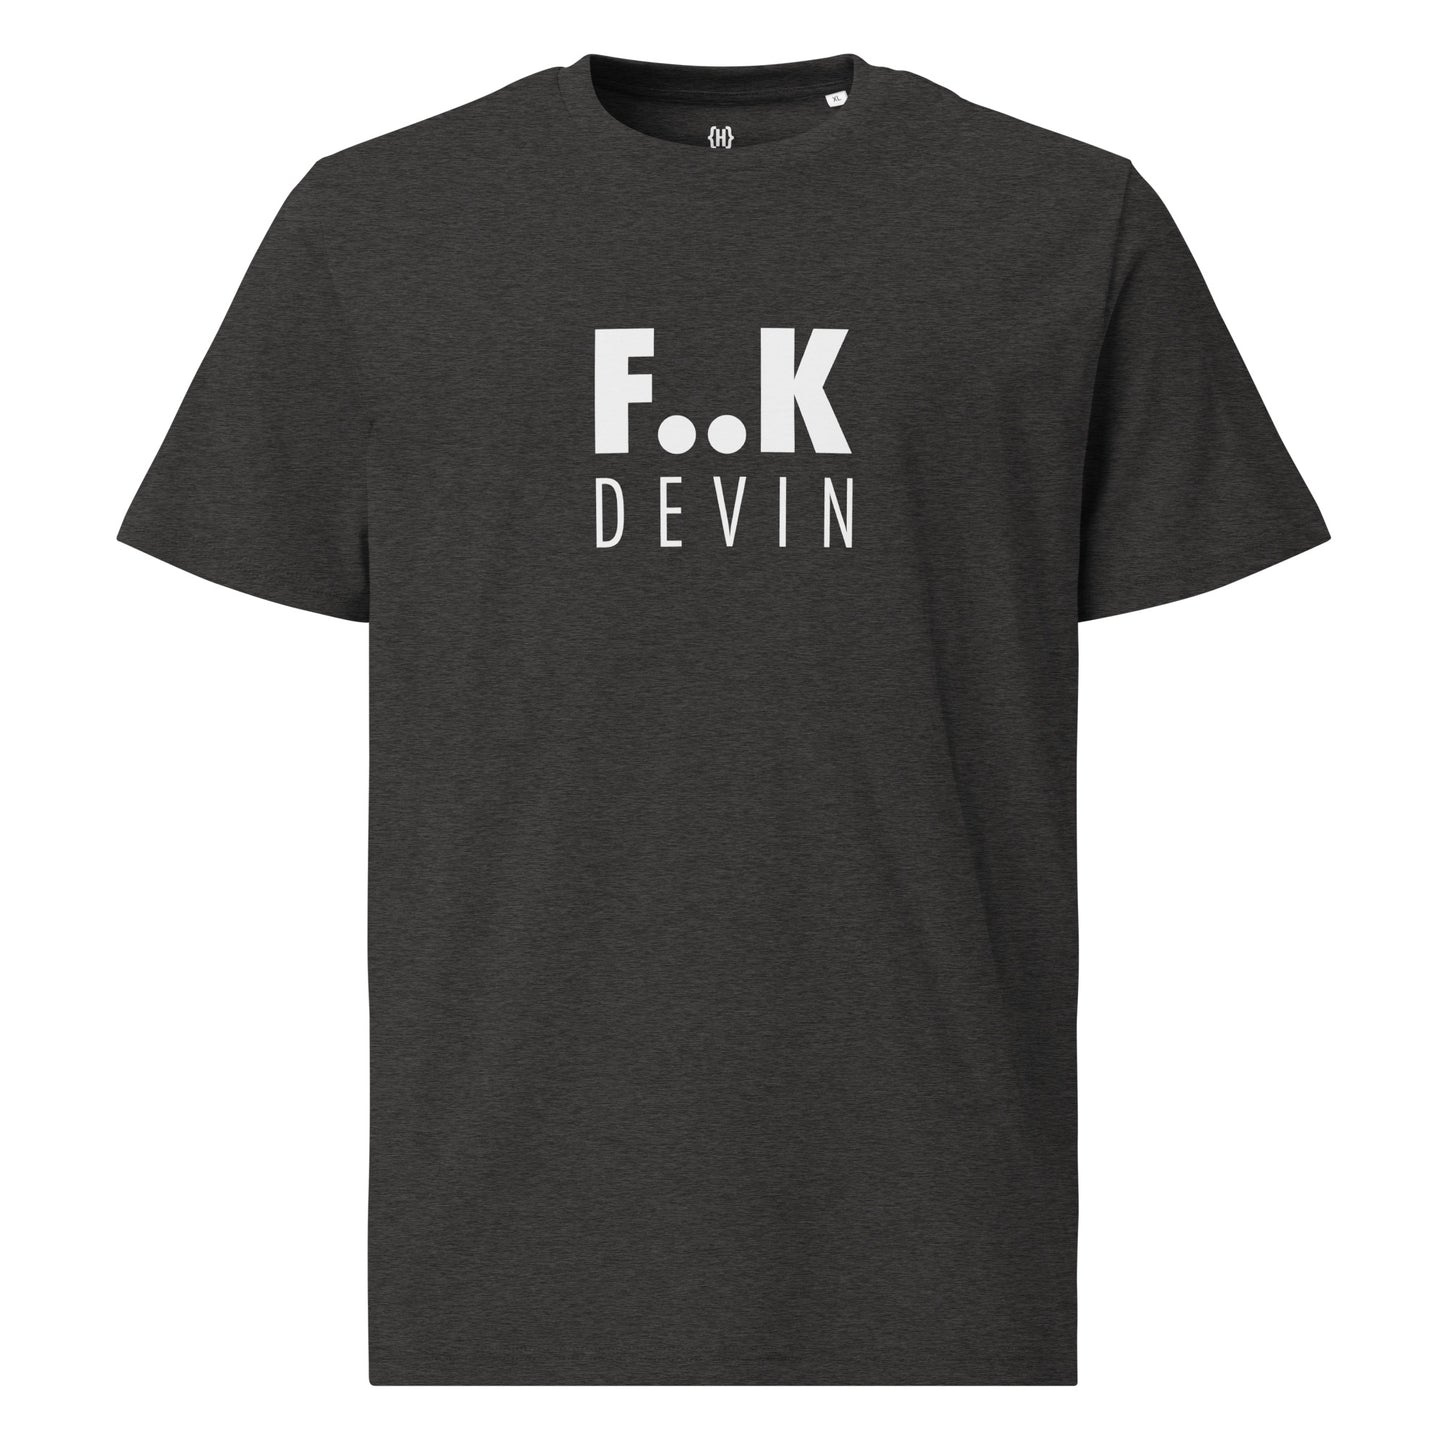 F..K DEVIN unisex organic cotton t-shirt